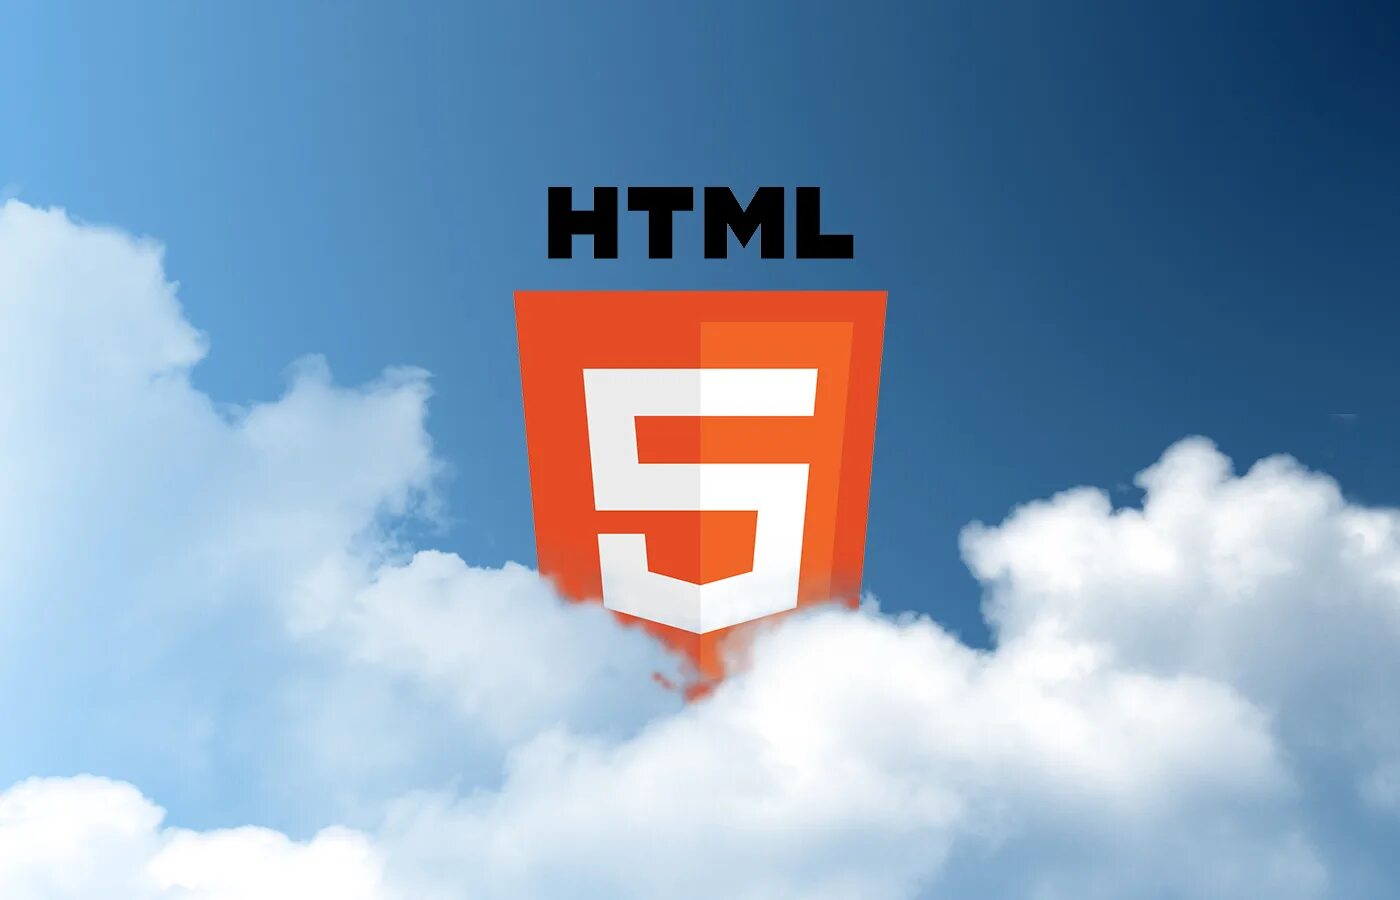 Html5 stream. Html. Html5 лого. Картинка html. Значок html5.